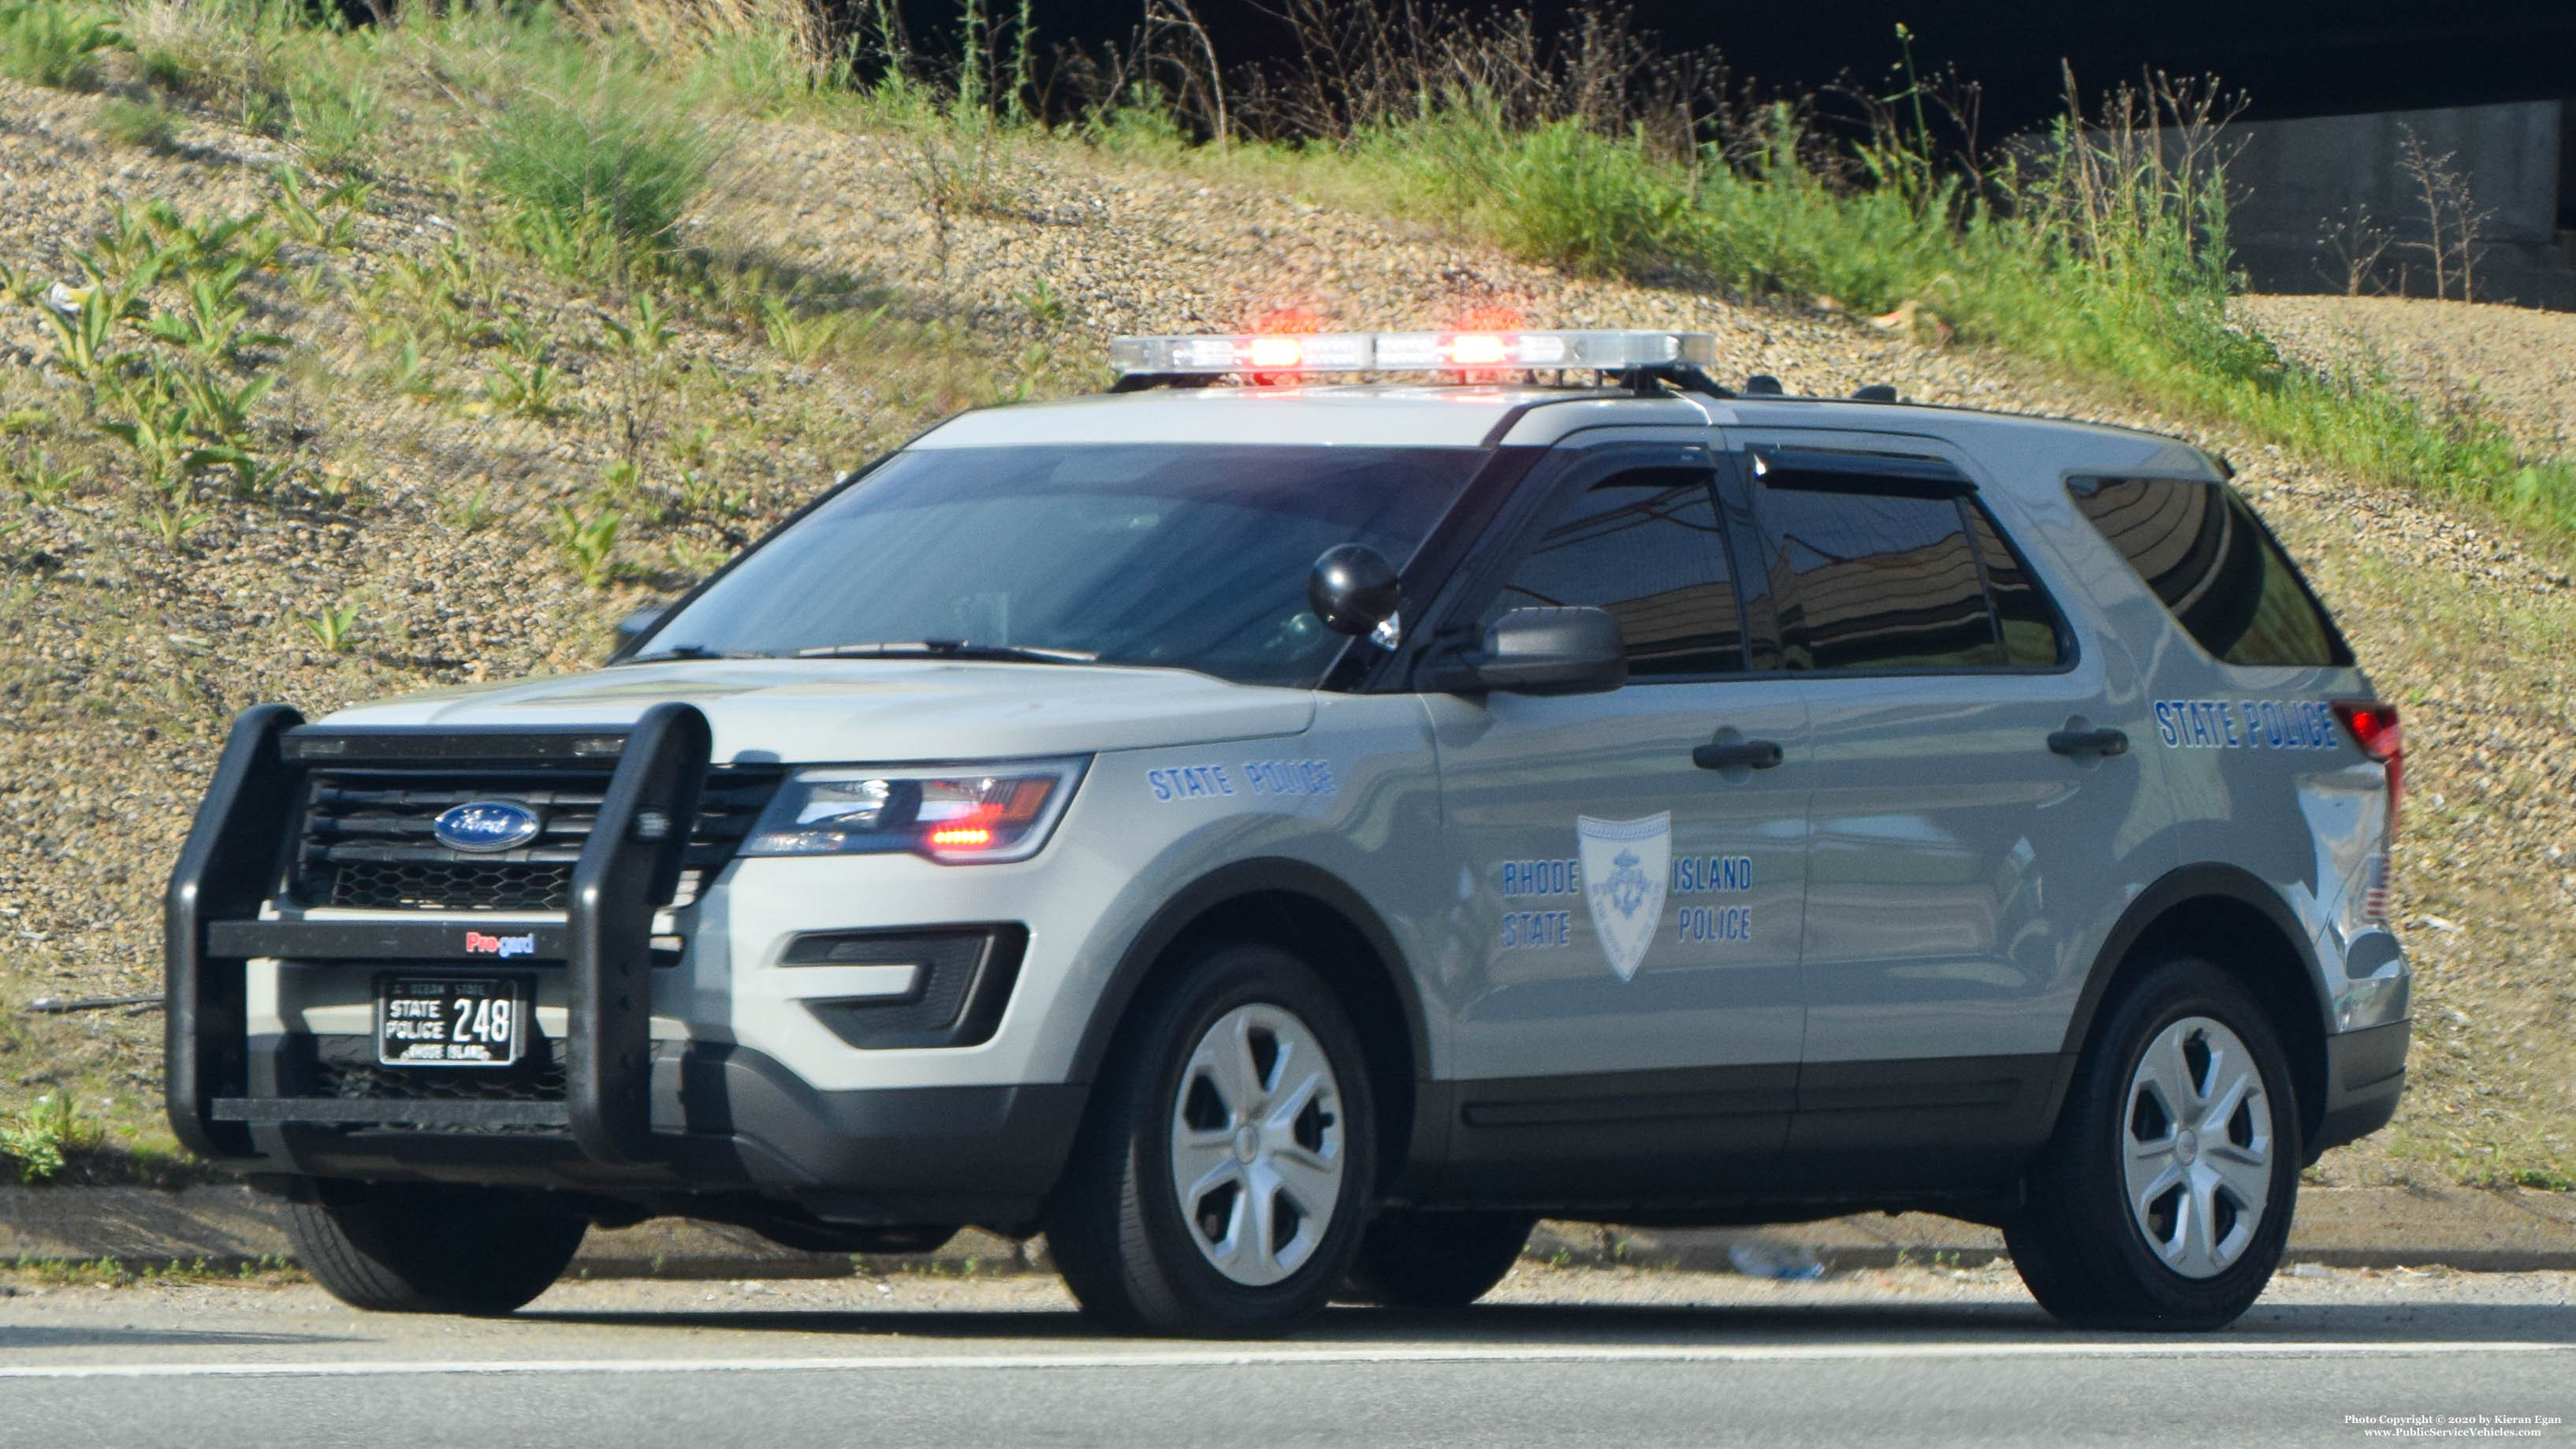 A photo  of Rhode Island State Police
            Cruiser 248, a 2018 Ford Police Interceptor Utility             taken by Kieran Egan